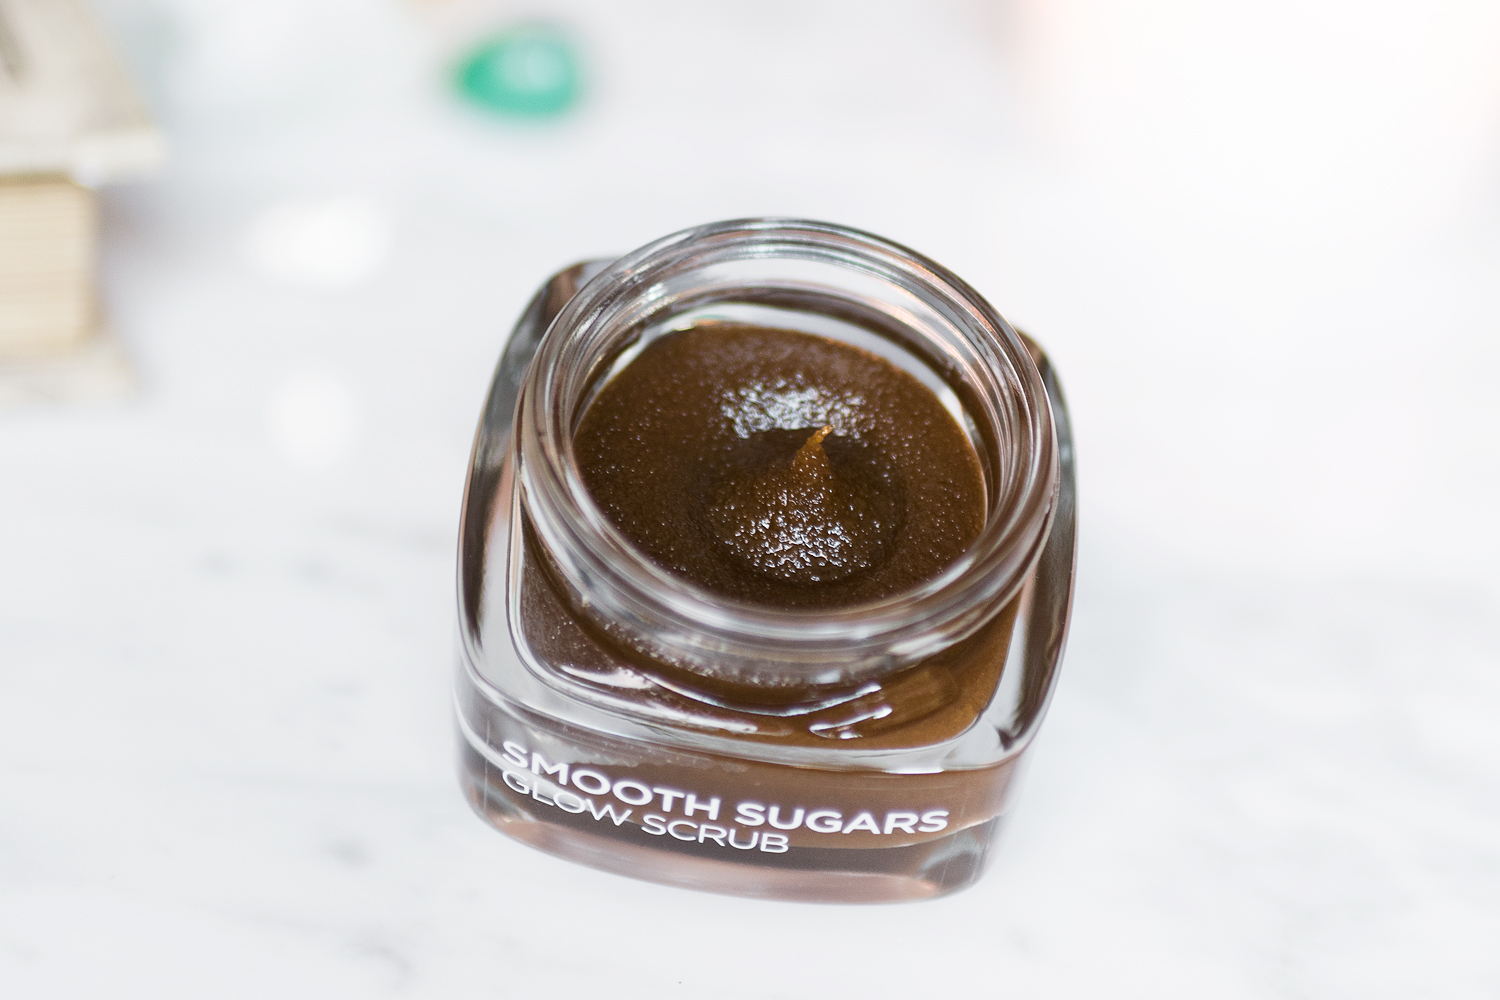 l'oréal paris smooth sugars